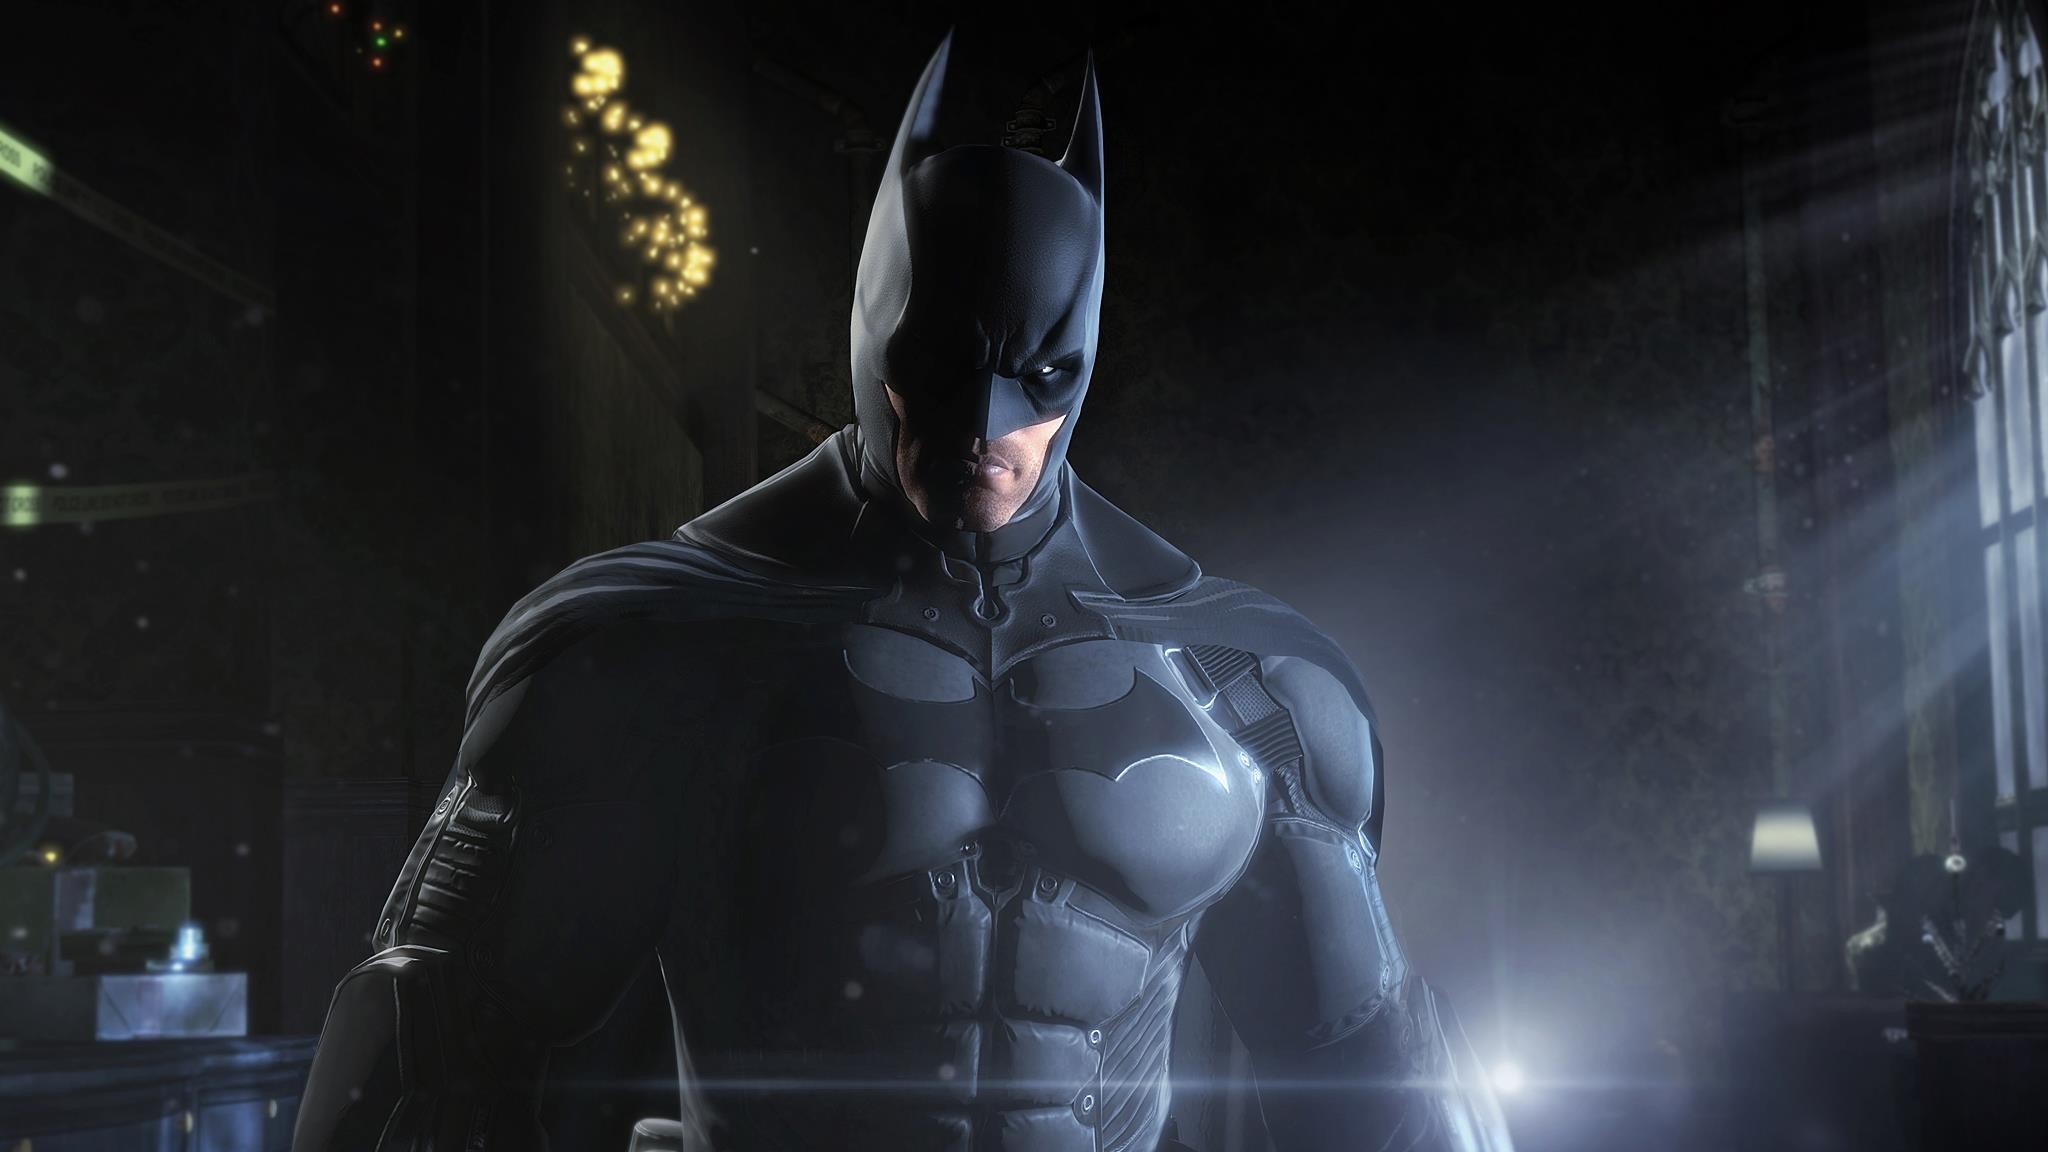 2048x1152 Batman Arkham Origins Widescreen Wallpaper for Nexus 6